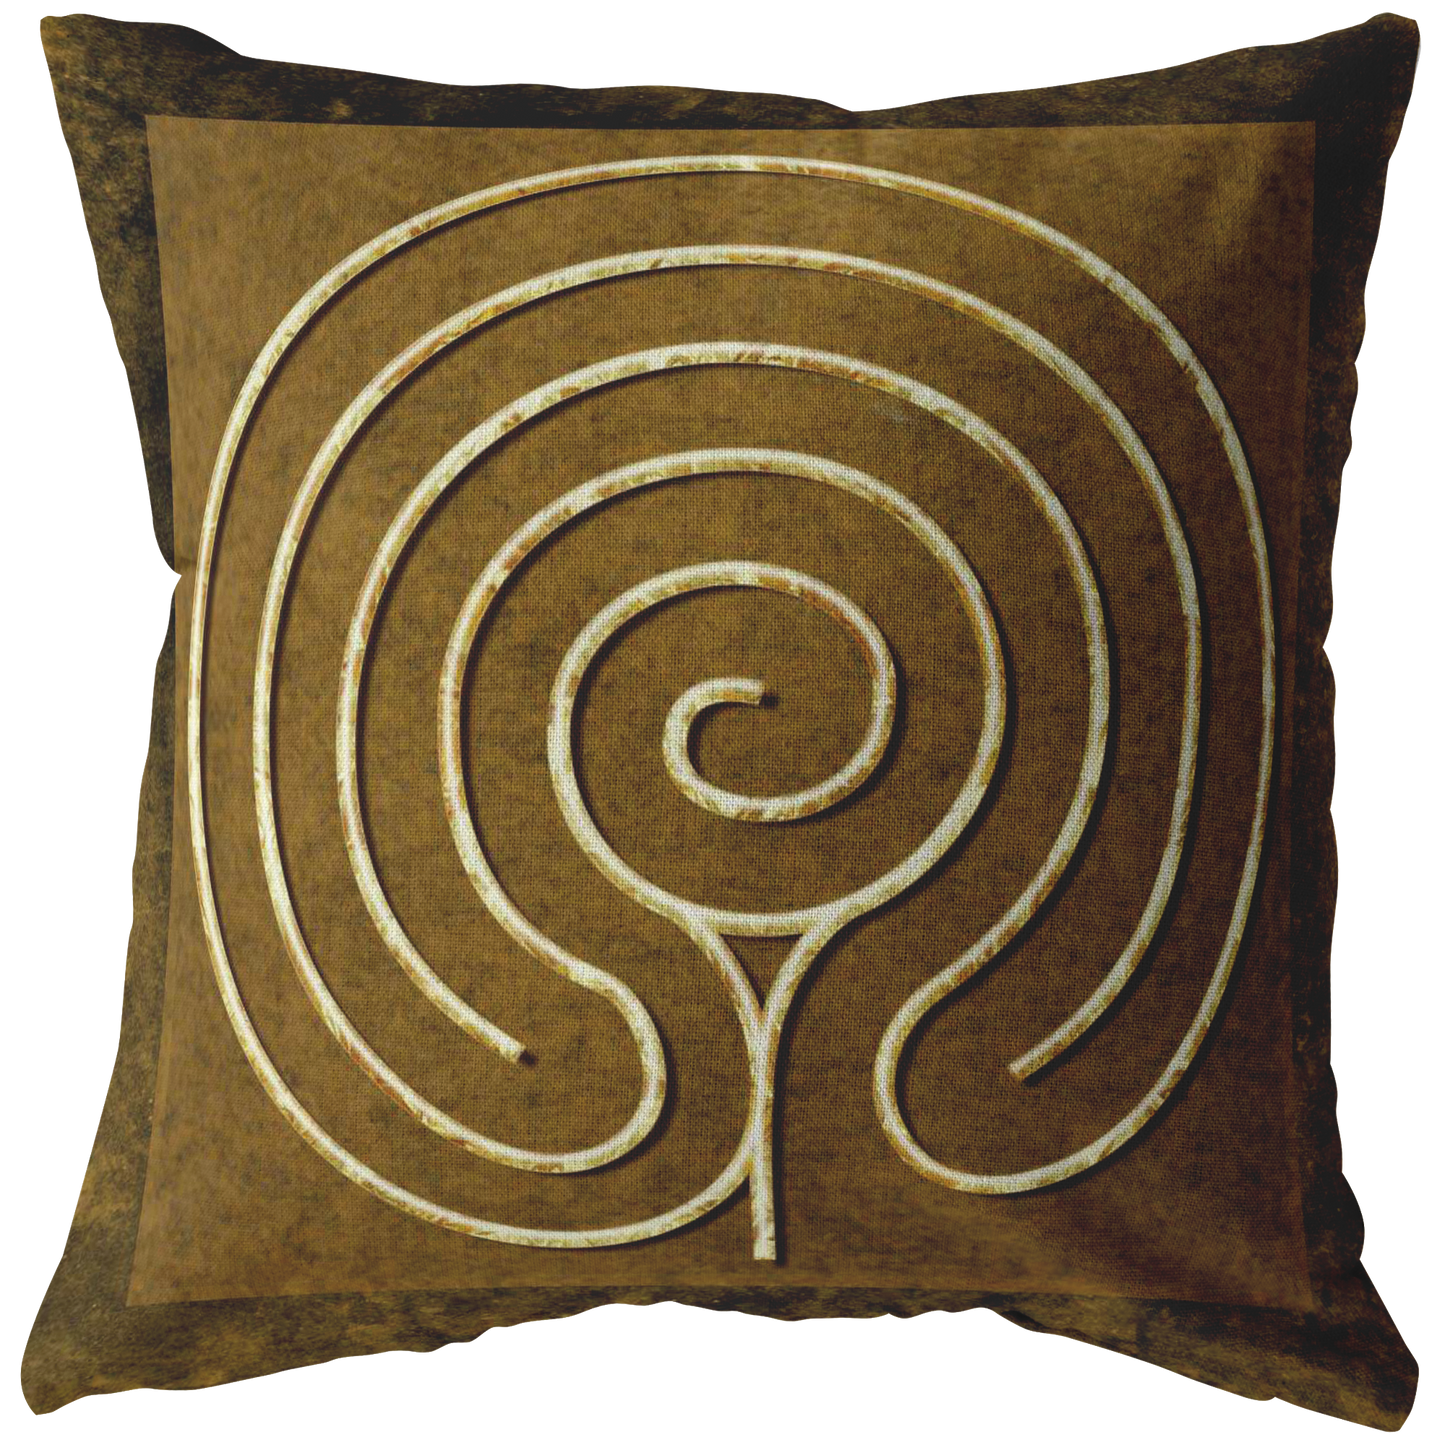 labyrinth,finger labyrinth,finger labyrinth for stress,finger labyrinth for meditation,cathedral labyrinth,sacred labyrinth,finger labyrinth for mindfulness